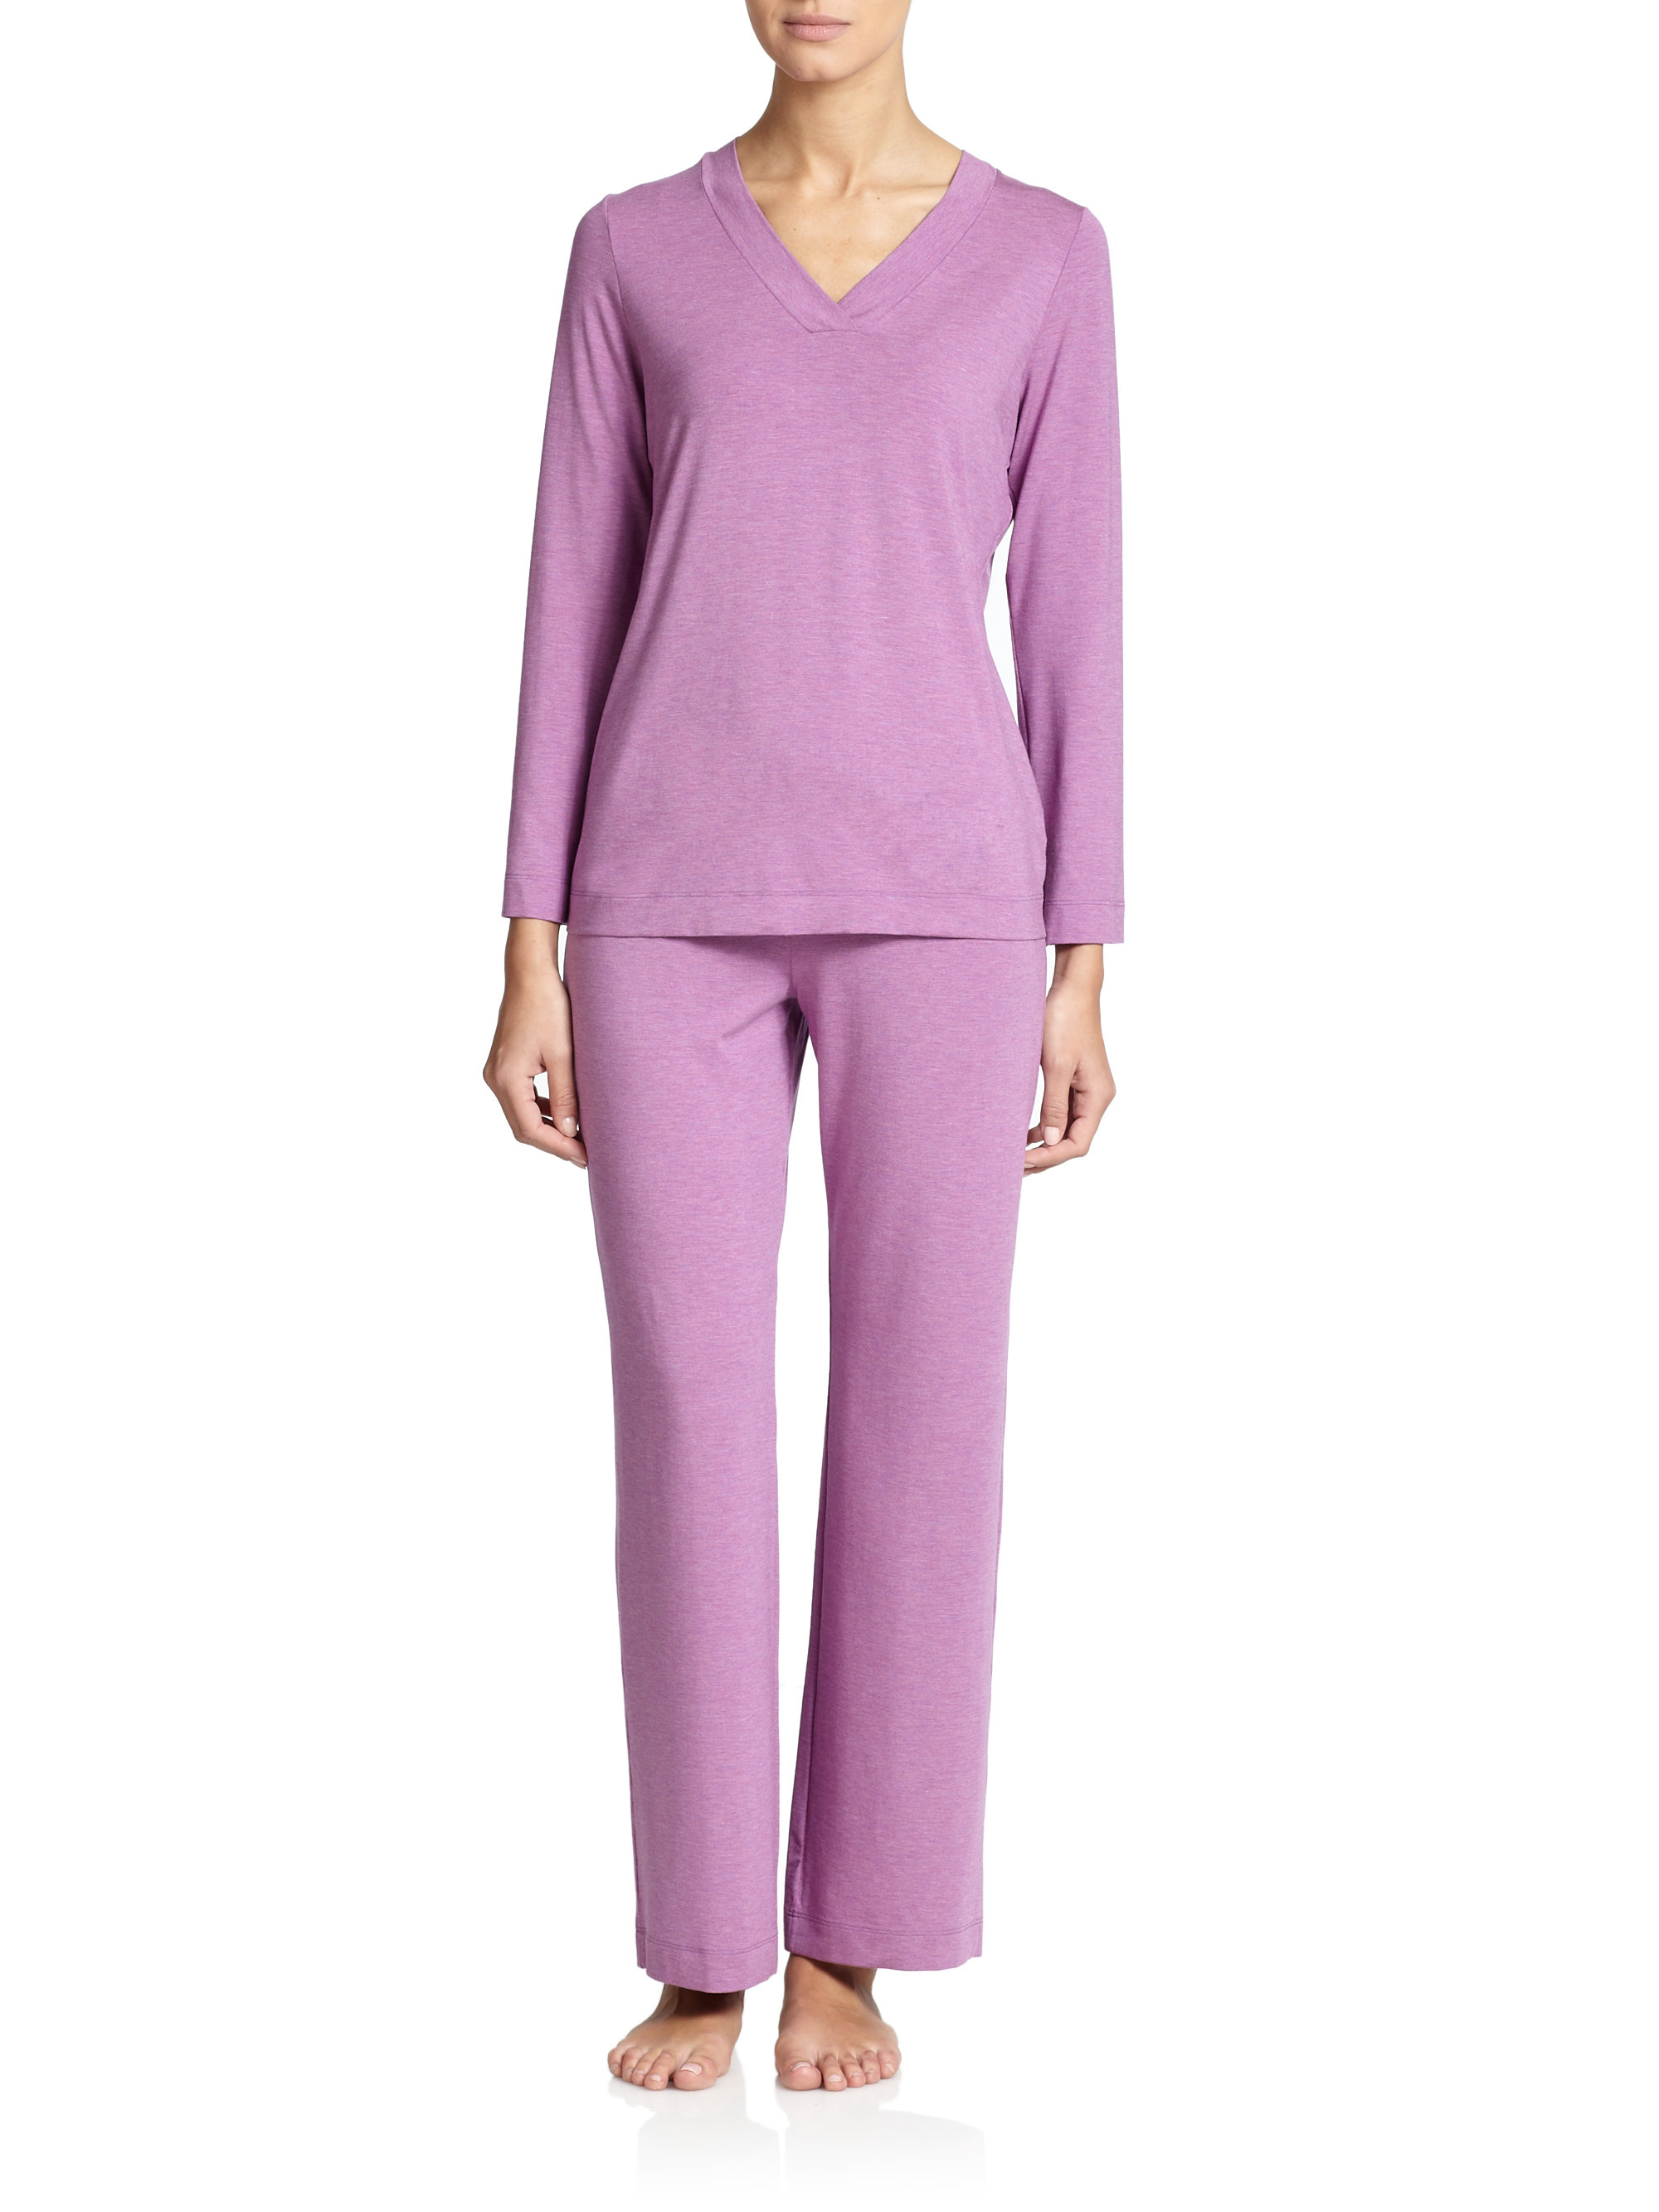 Lyst - Hanro Long-sleeve Pajamas in Purple